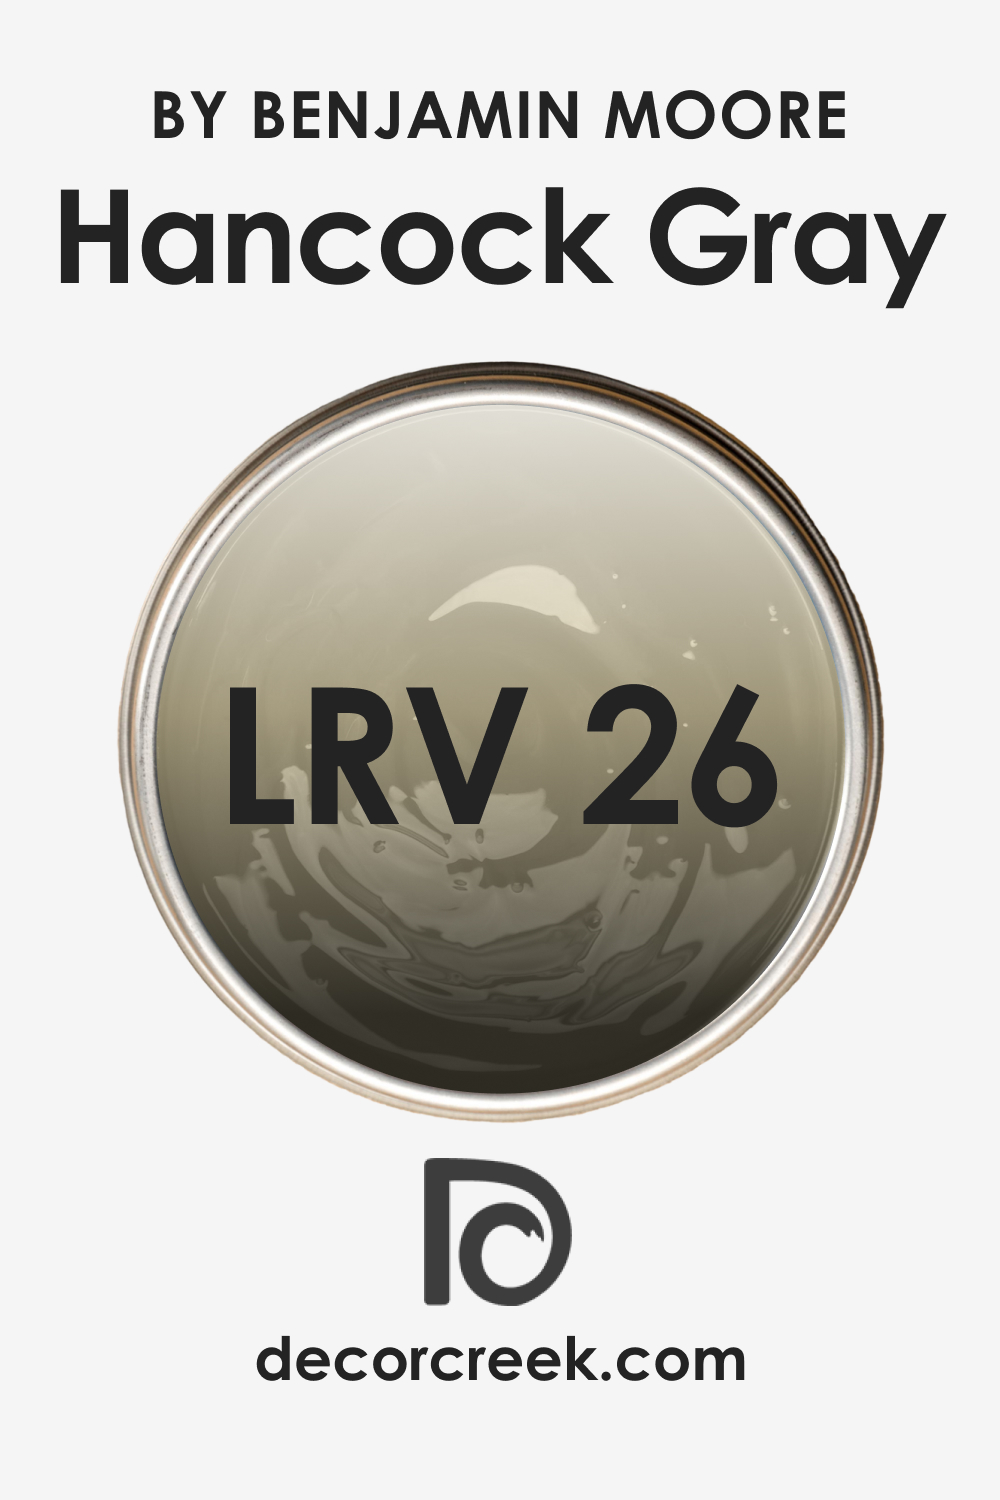 LRV of Hancock Gray HC-97